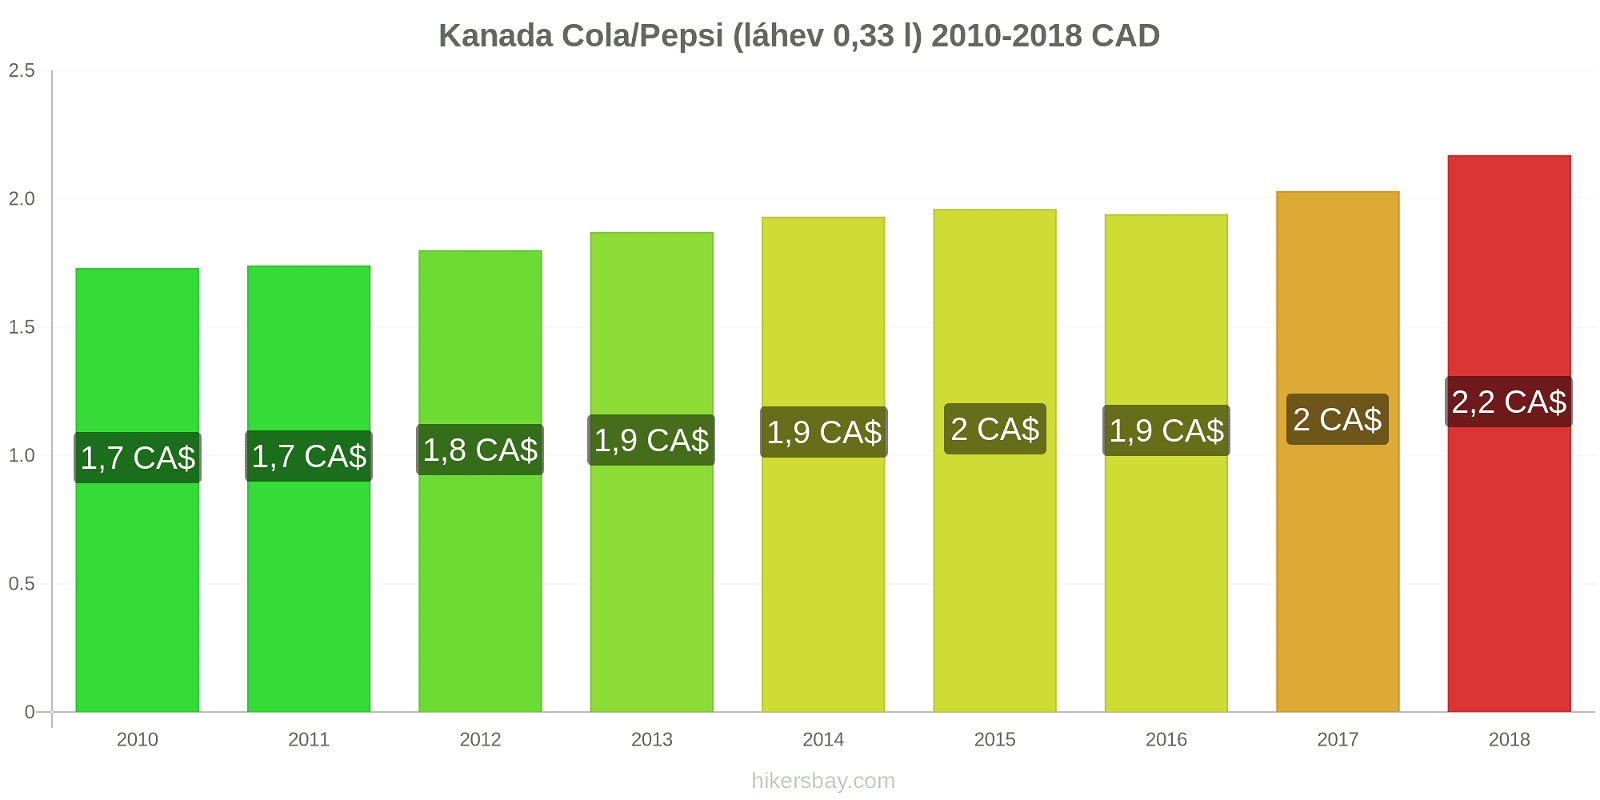 Kanada změny cen Coca-Cola/Pepsi (láhev 0.33 l) hikersbay.com